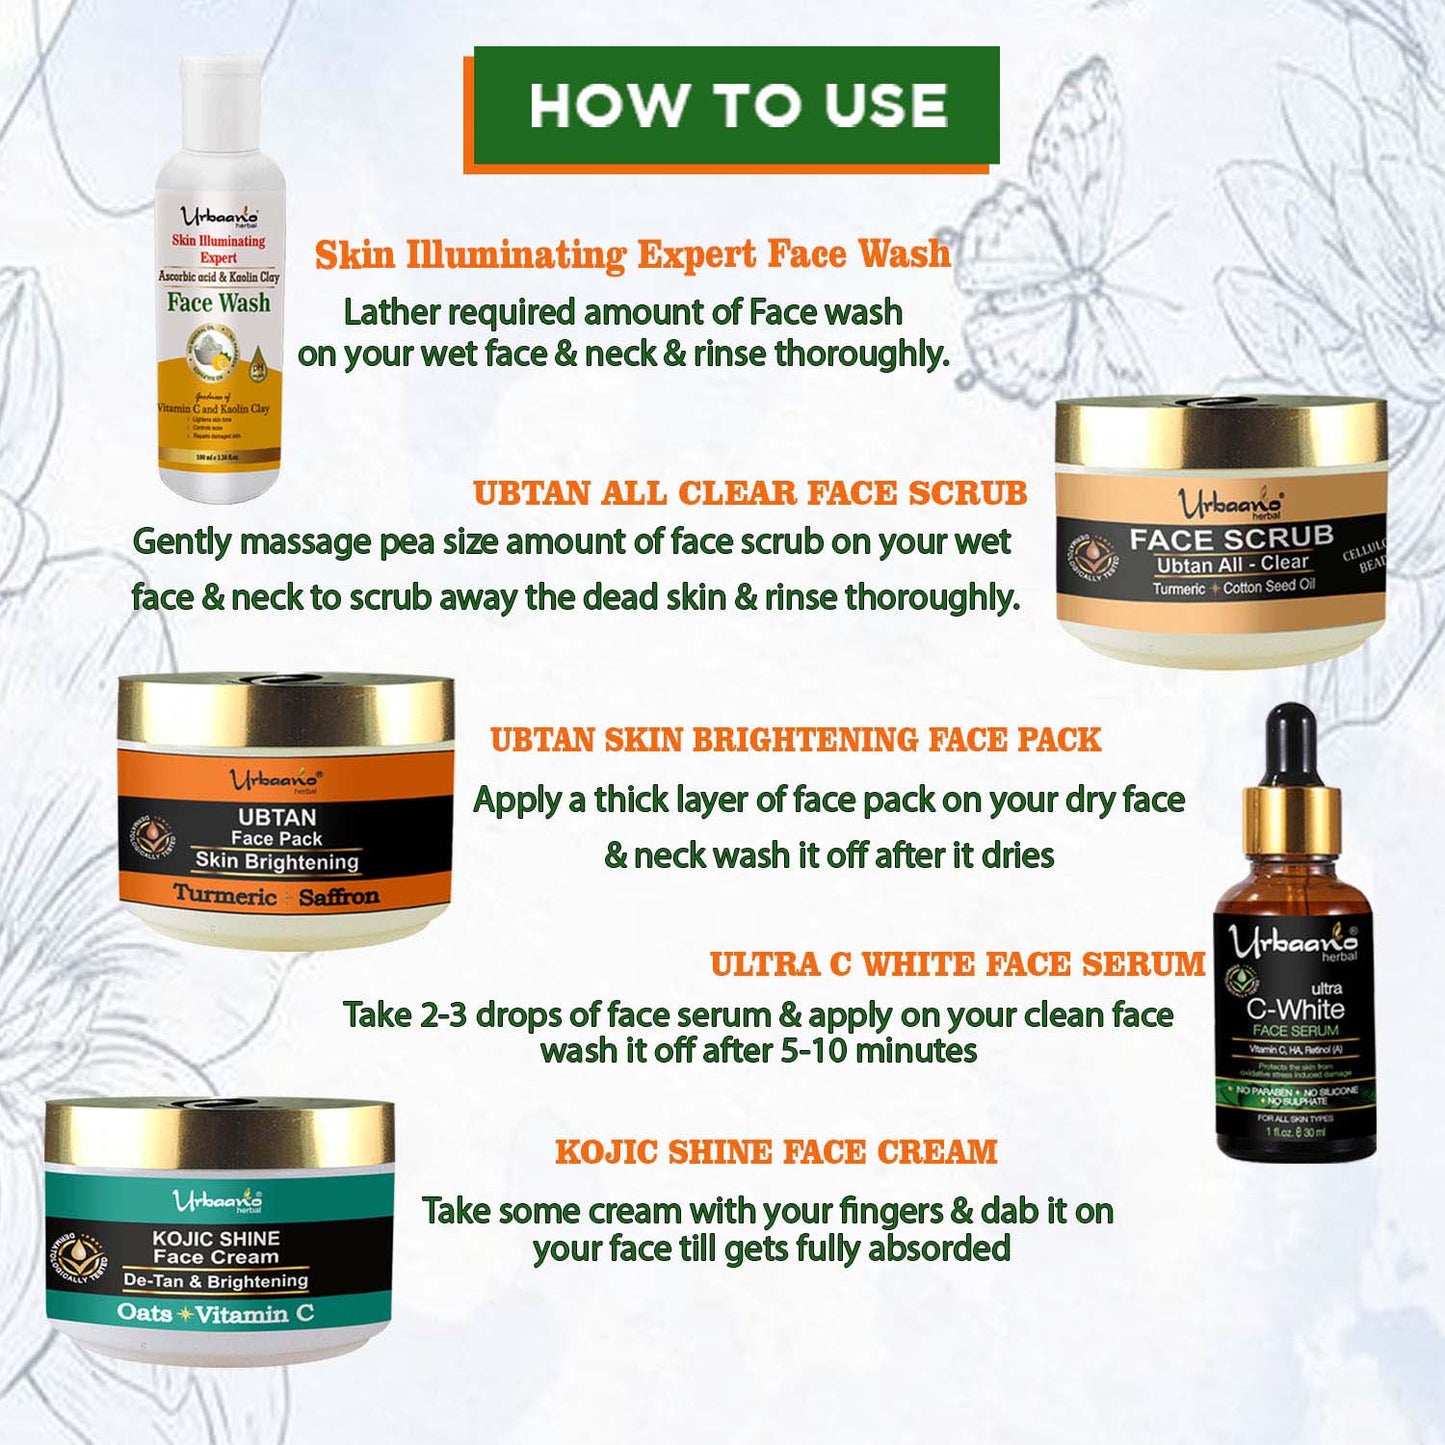 urbaano herbal vitamn c de tan facial kit  face wash, scrub, pack, cream, serum easy to use in 5 steps